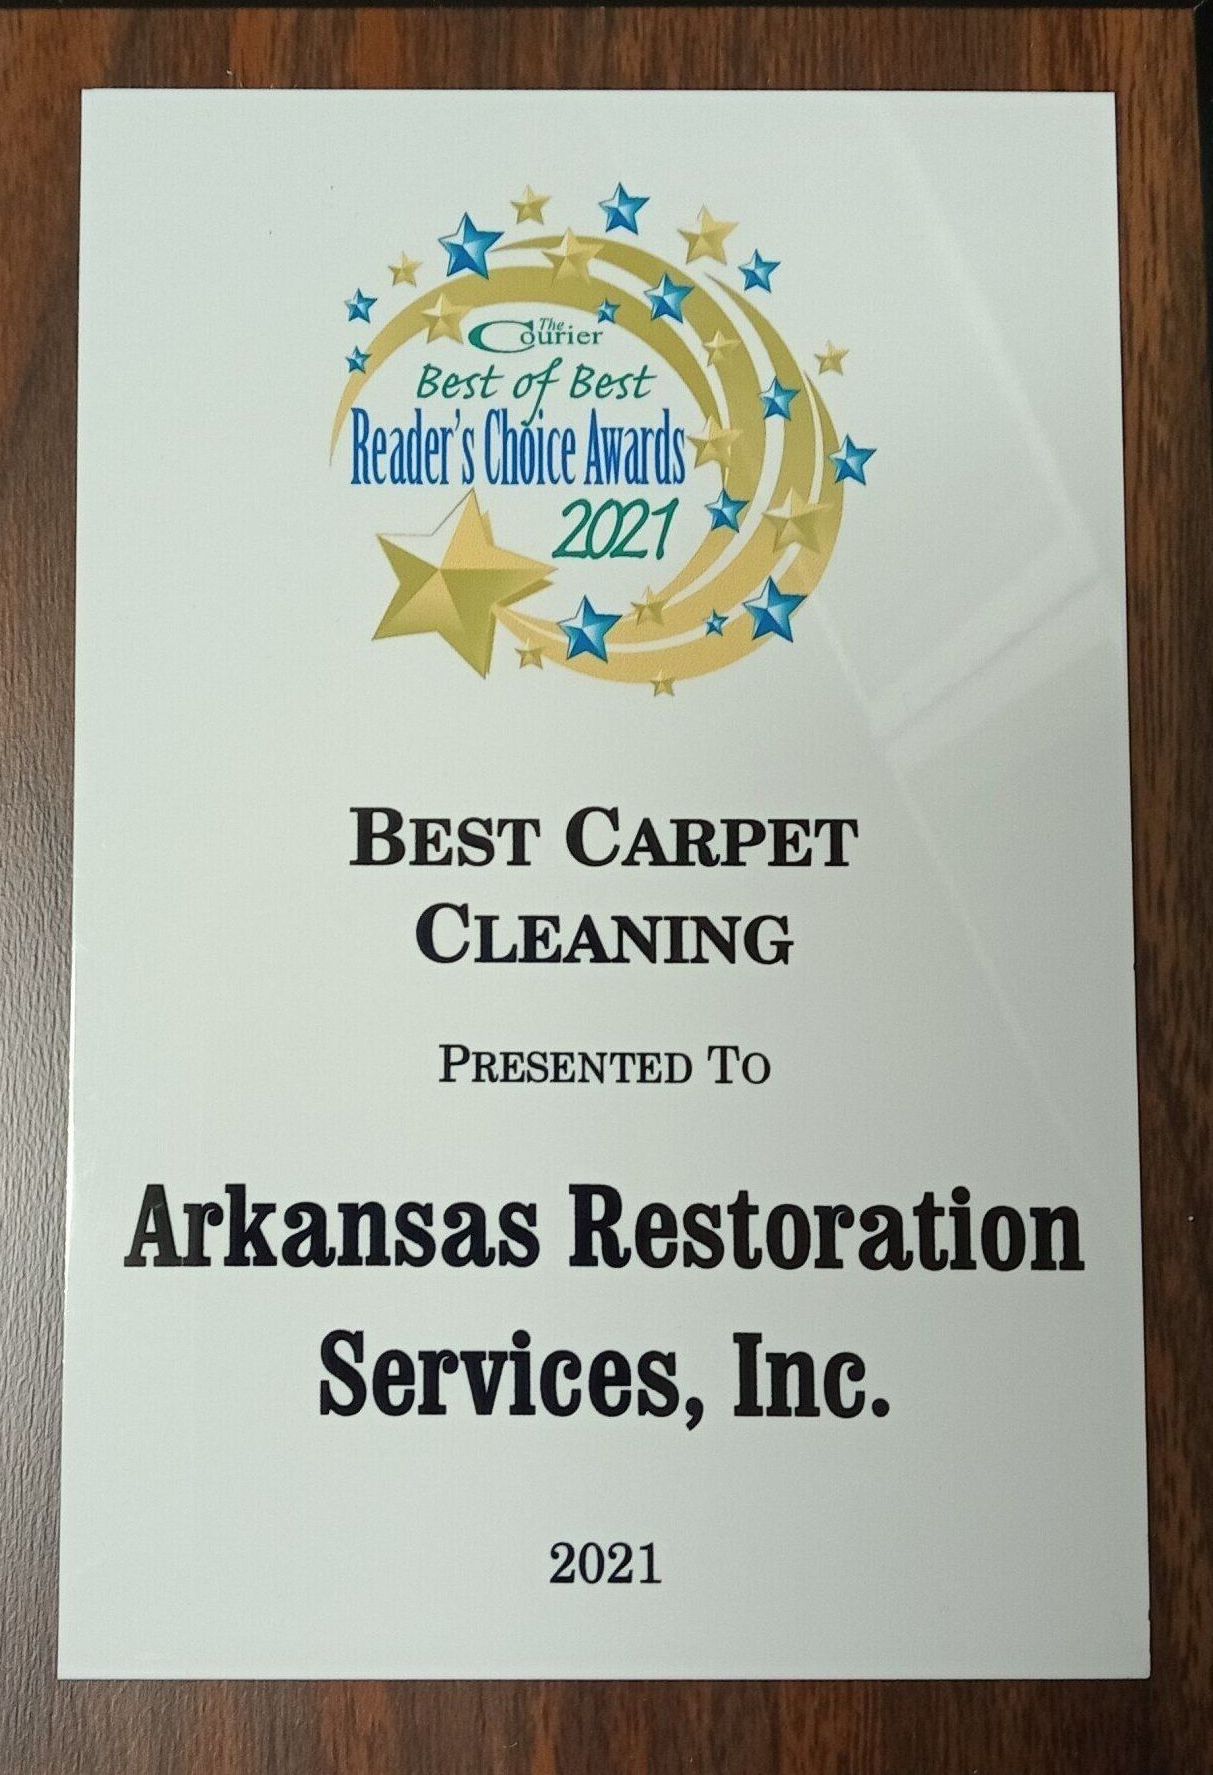 Arkansas Restoration Services Inc Russellville AR best carpet cleaning award 2021